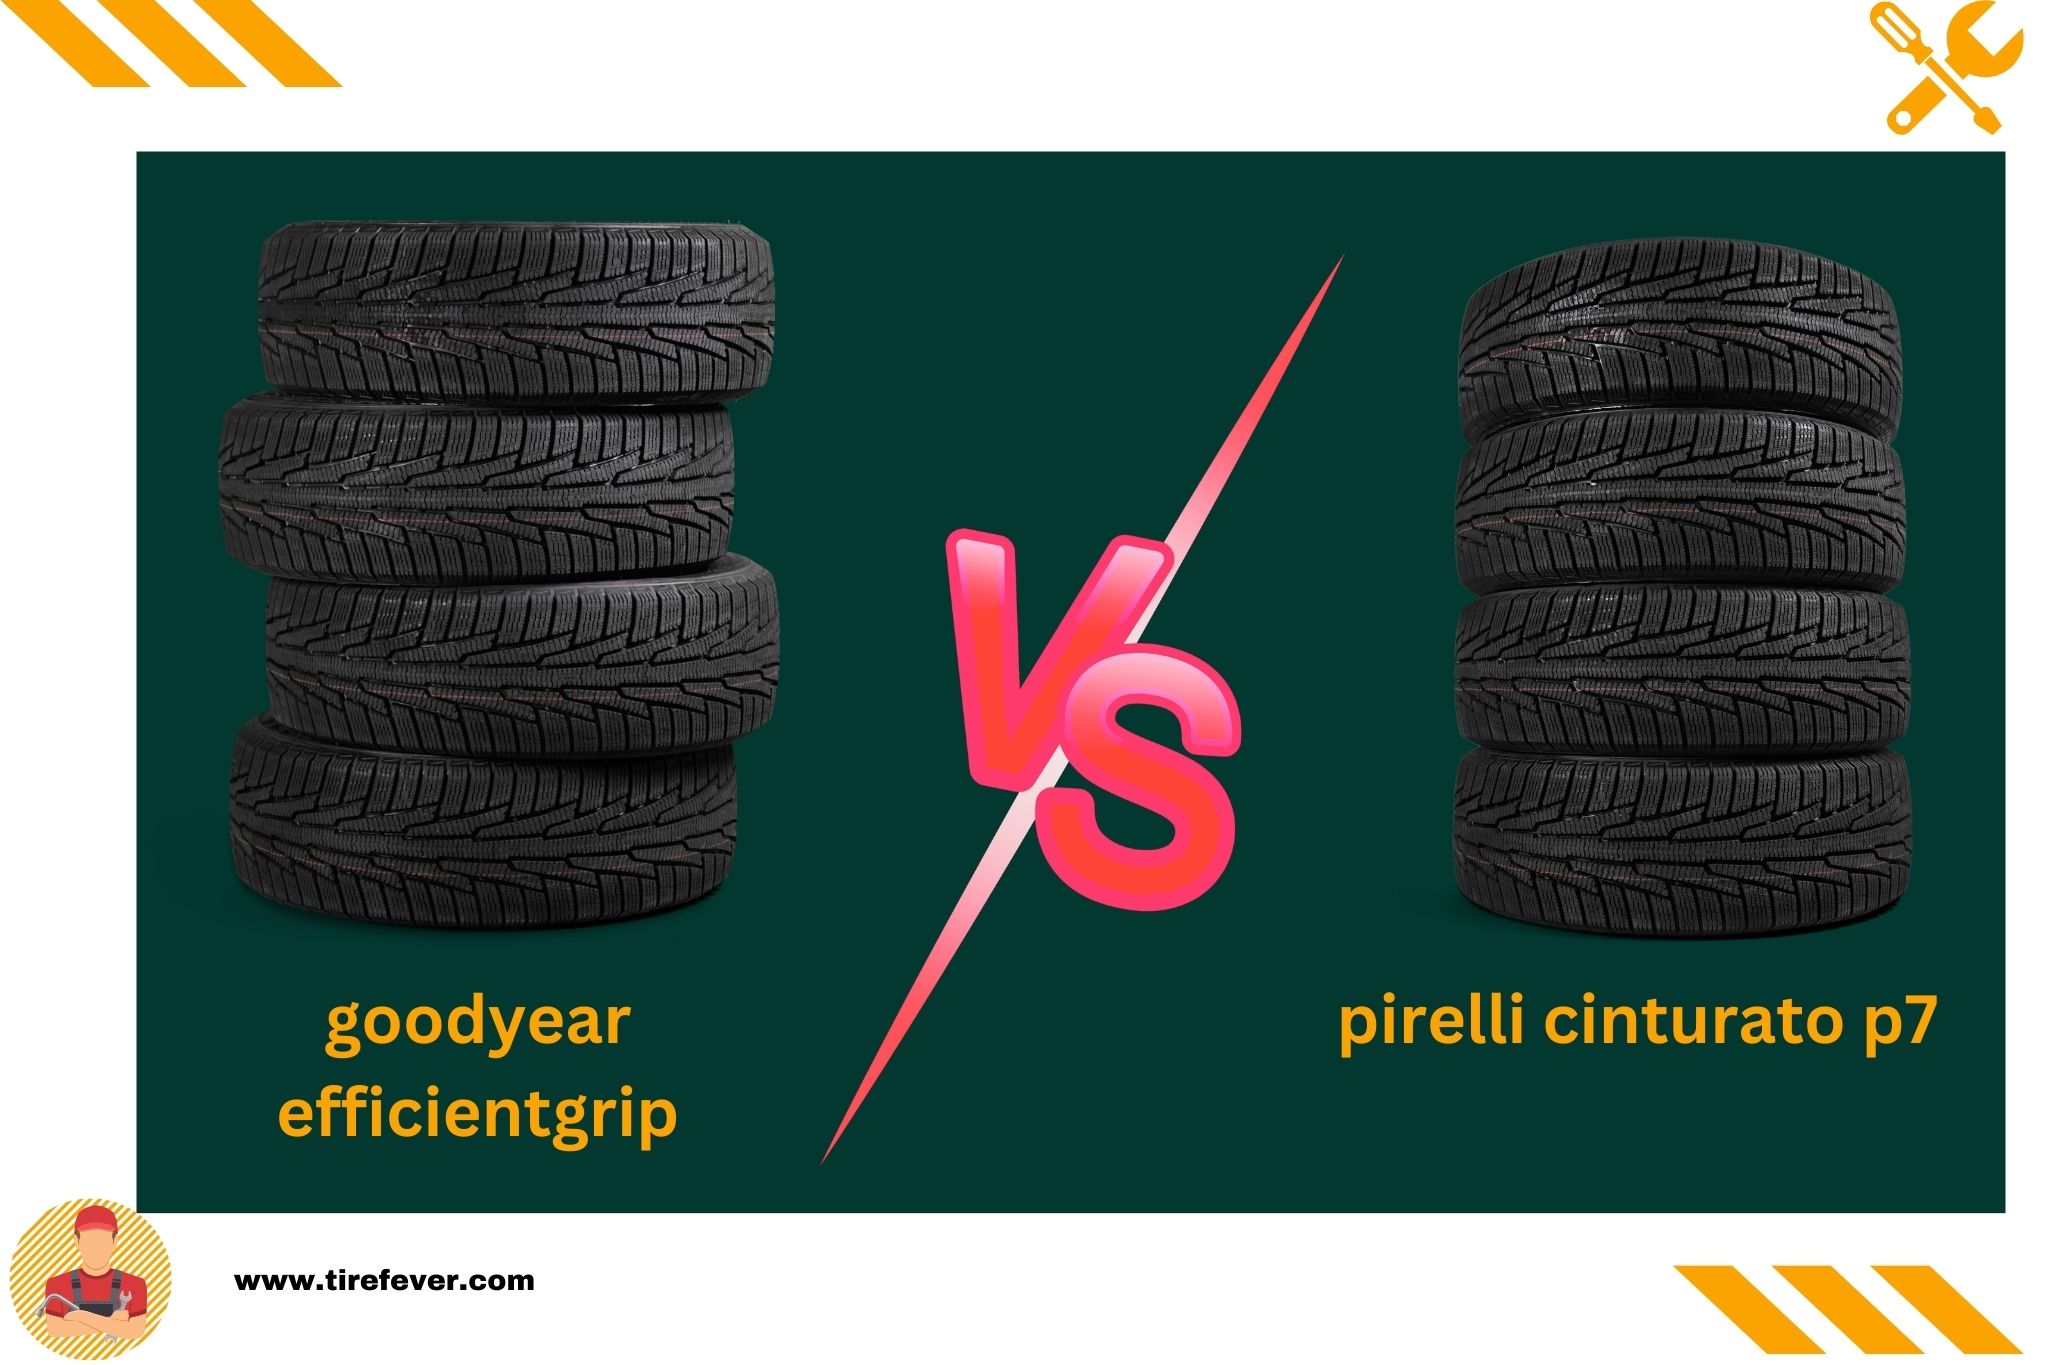 goodyear efficientgrip vs pirelli cinturato p7